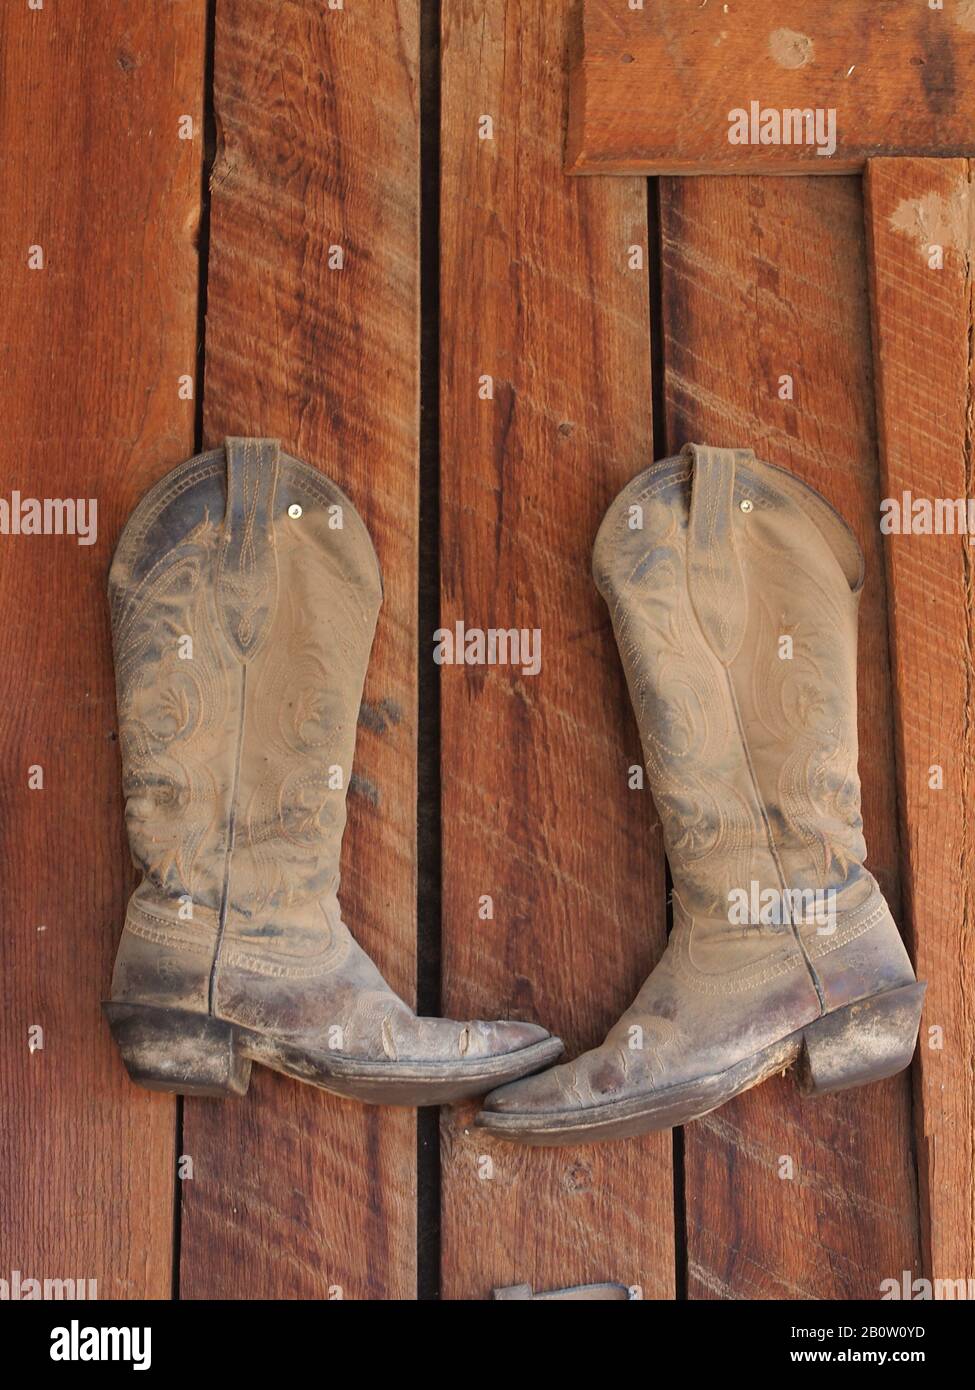 western barn boots